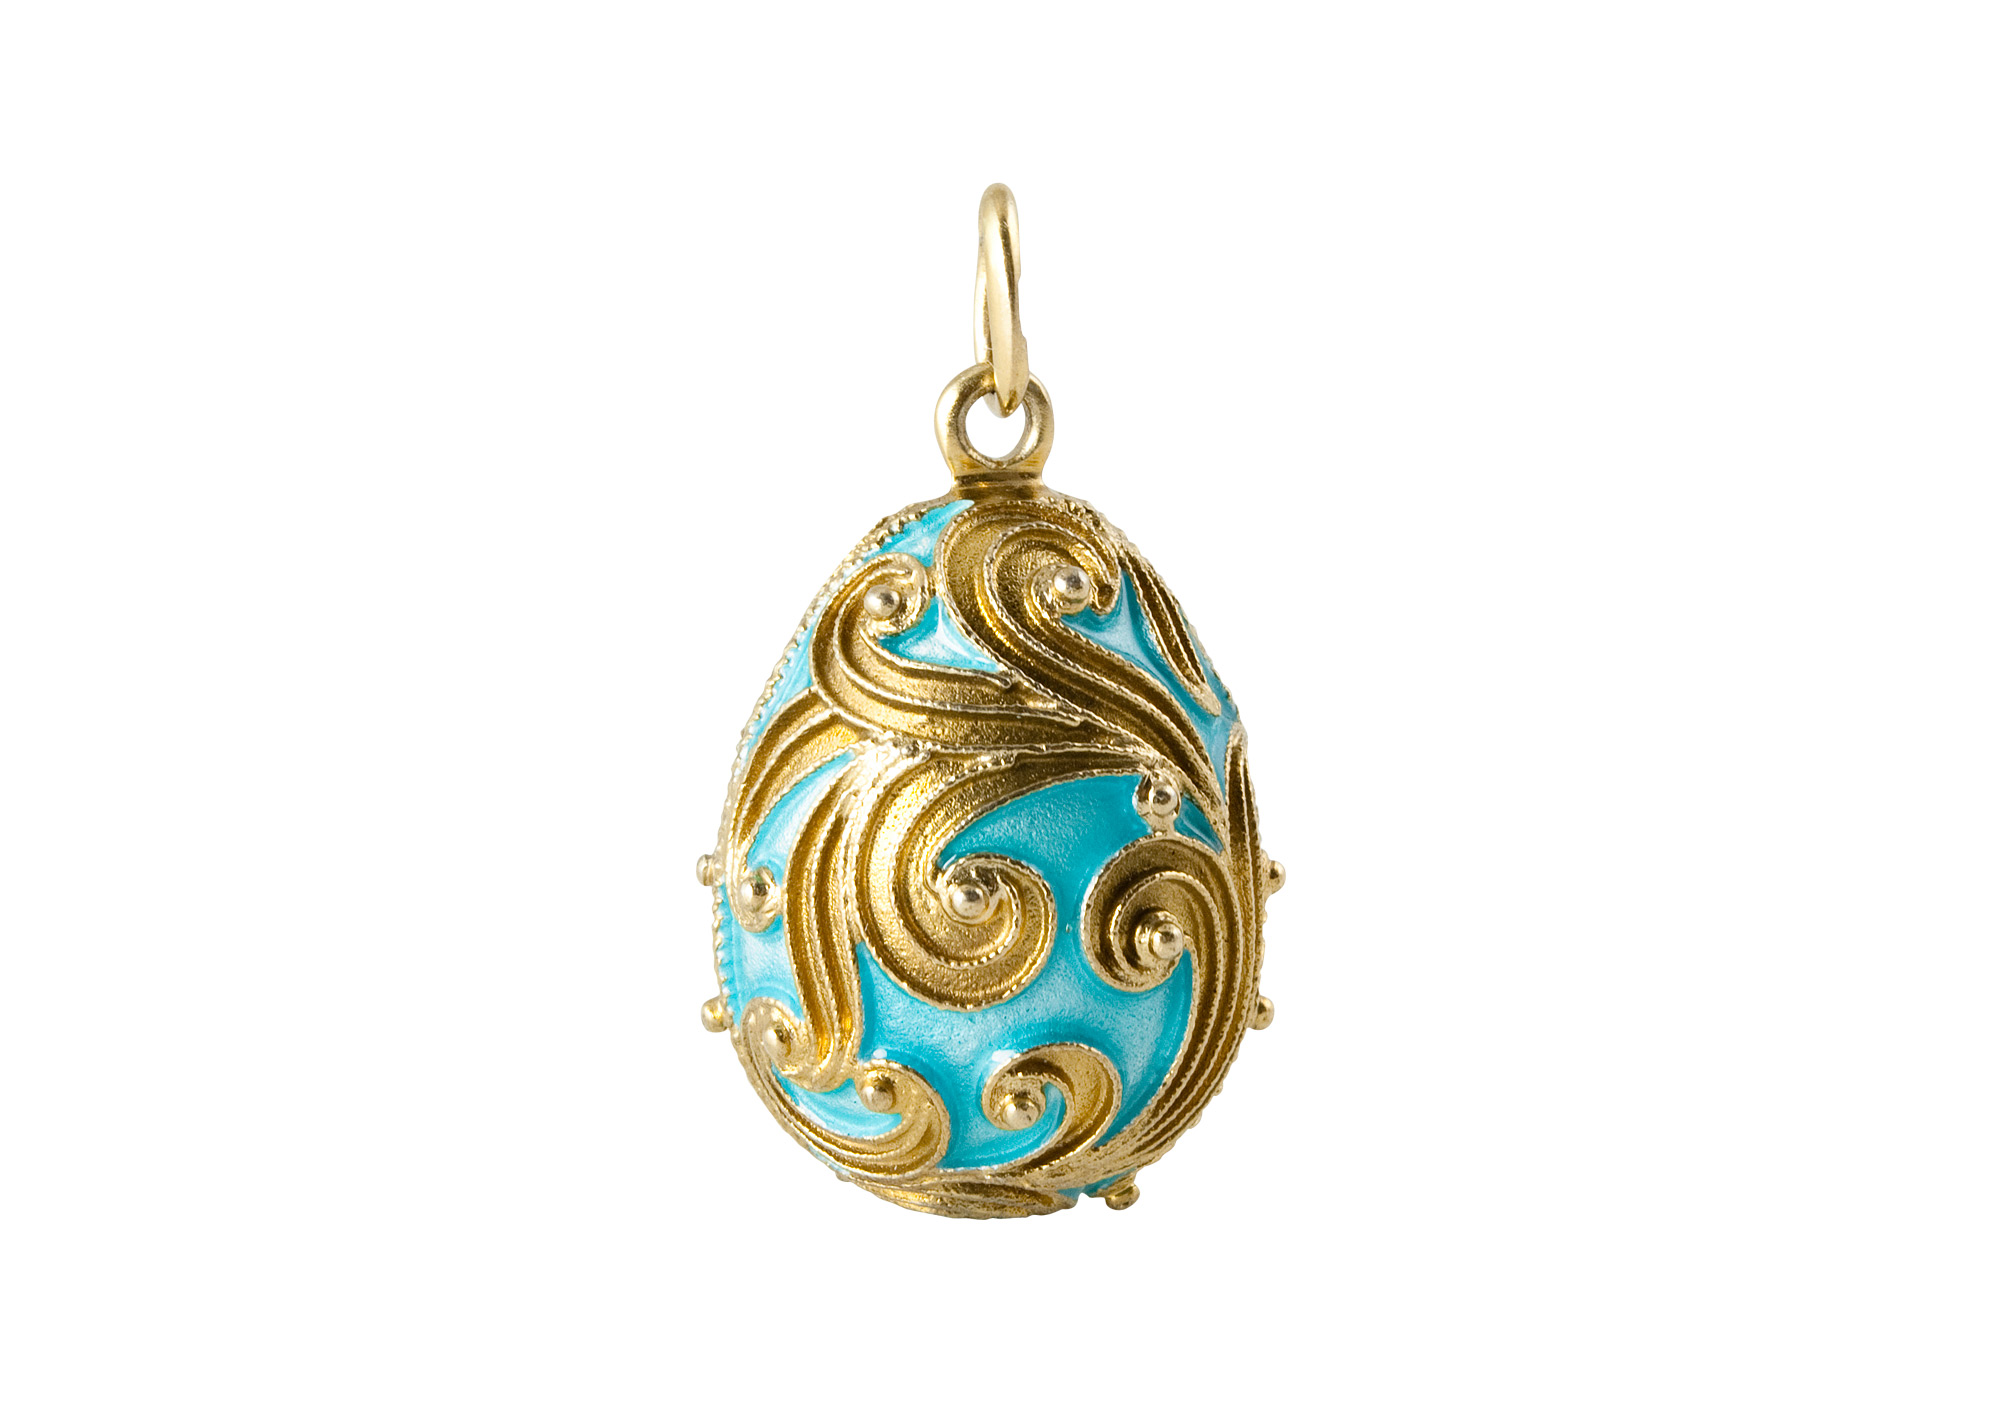 Buy Teal Swirling Gold Egg Pendant 1" at GoldenCockerel.com